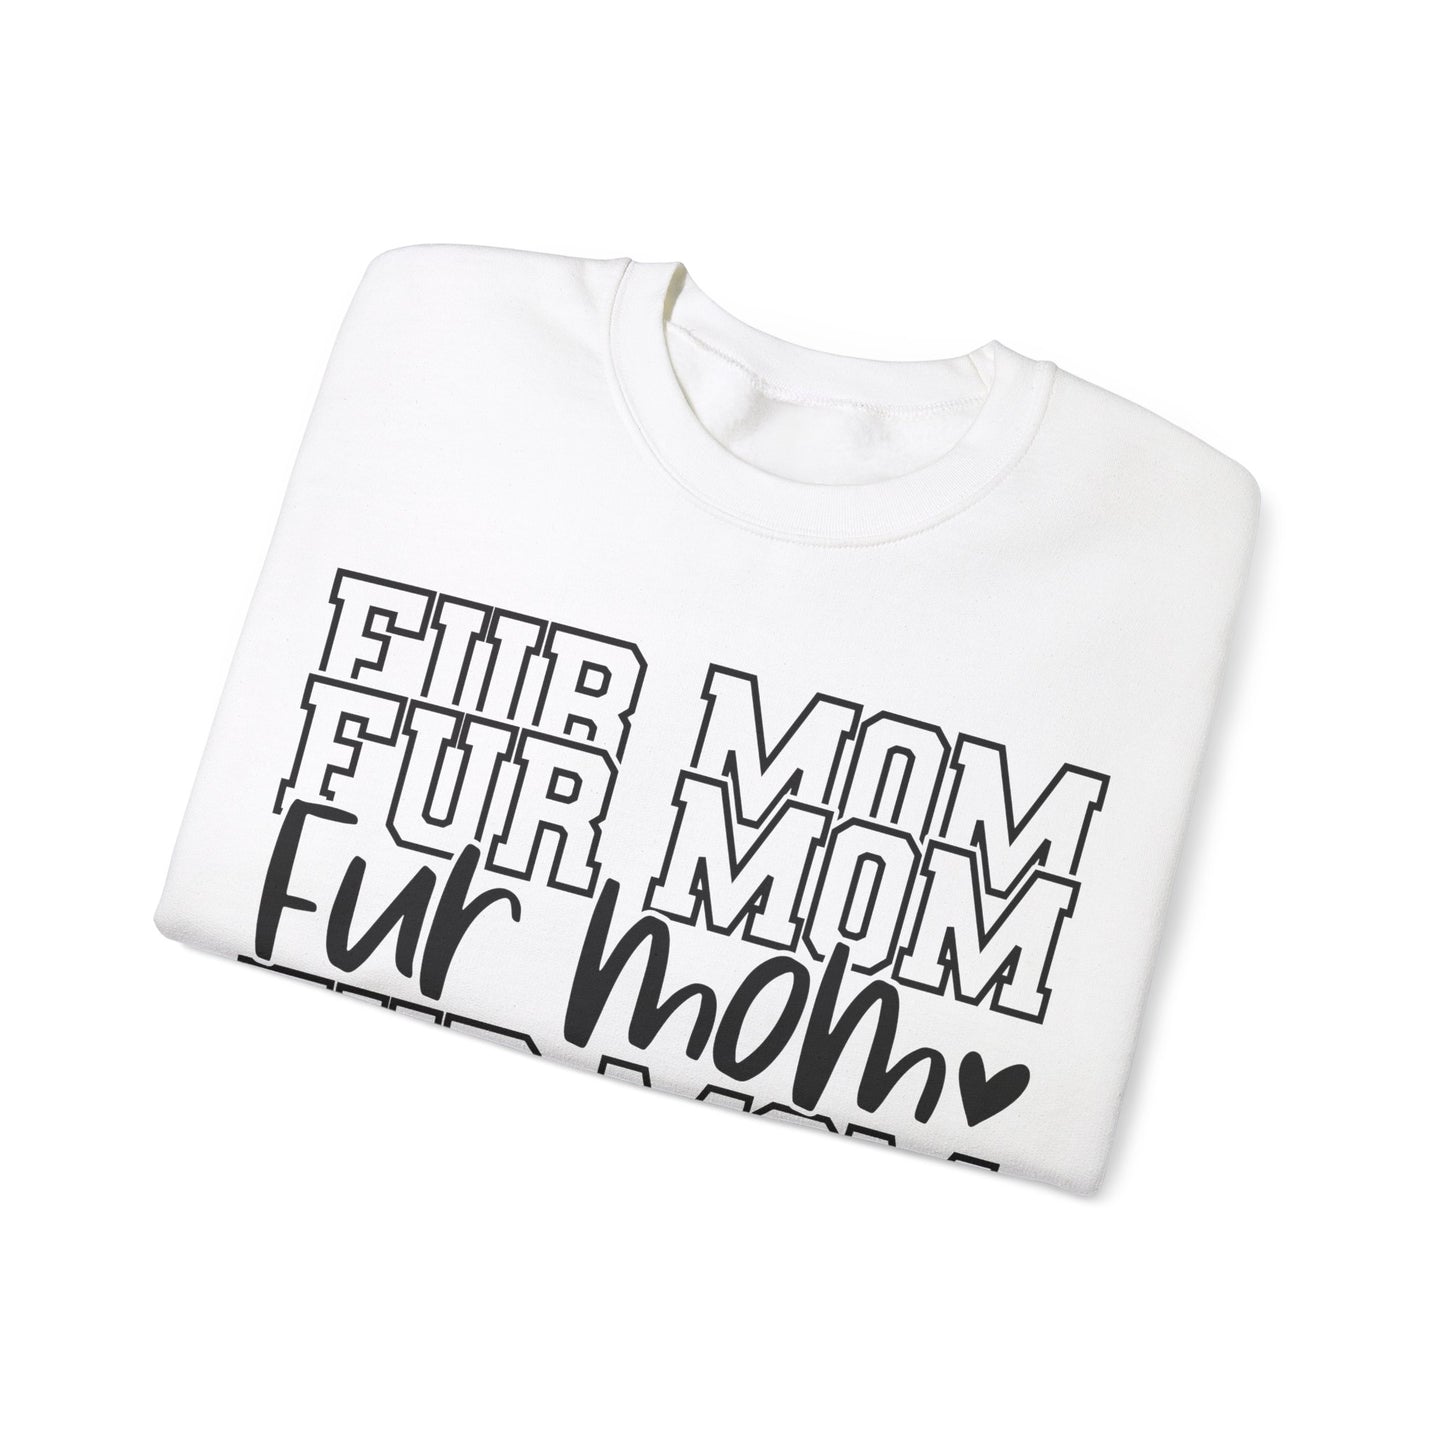 Fur MOM - Crewneck Sweatshirt